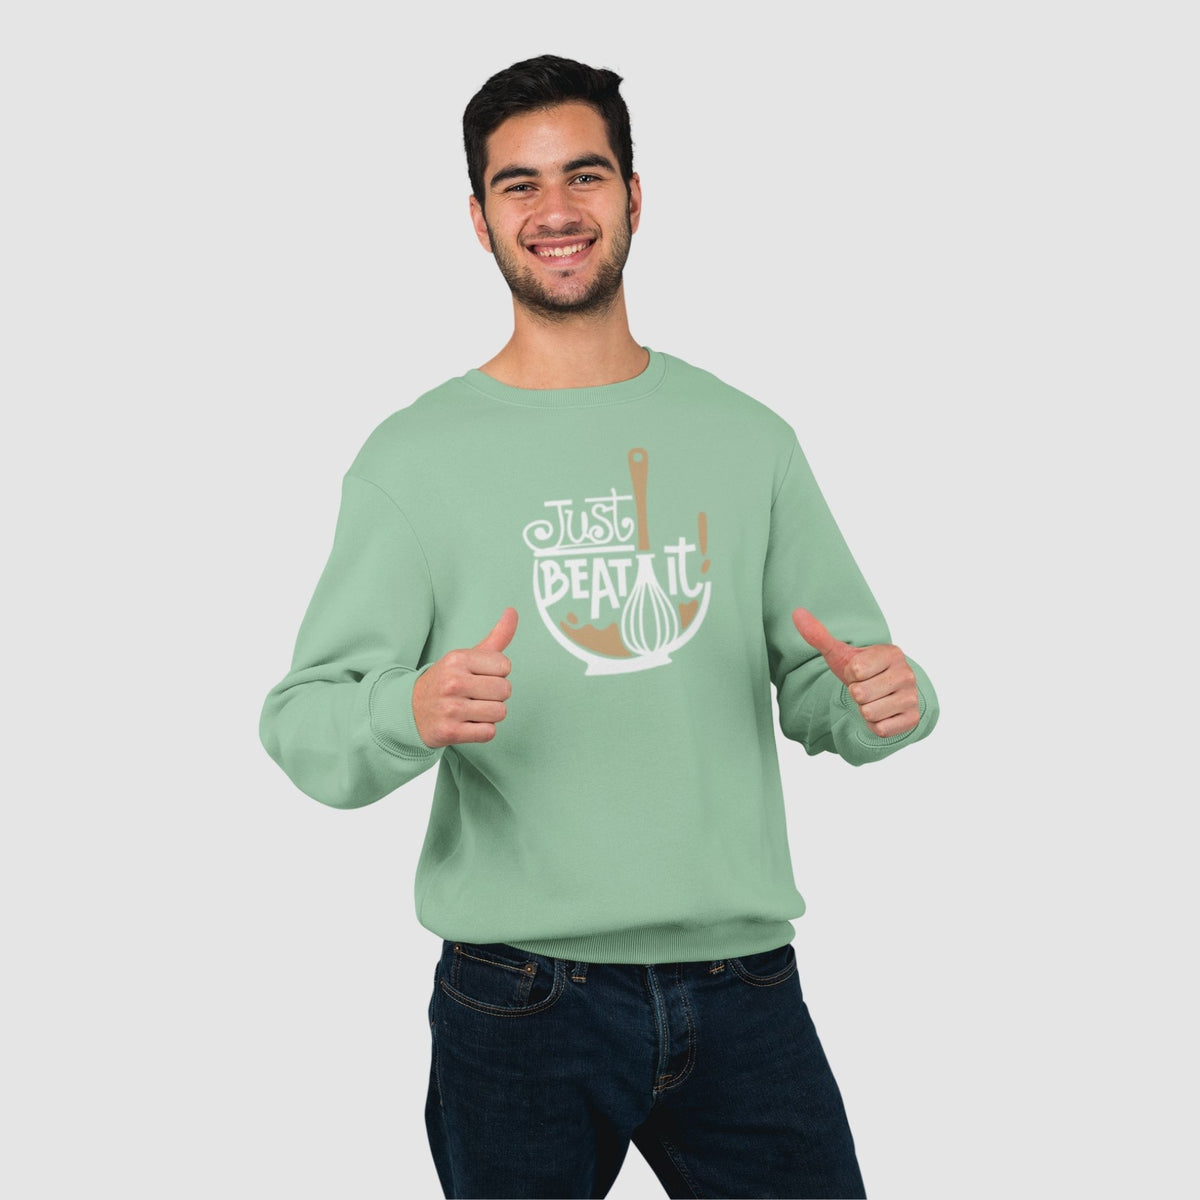 just-beat-it-cotton-printed-unisex-mint-sweatshirt-men-model-gogirgit-com